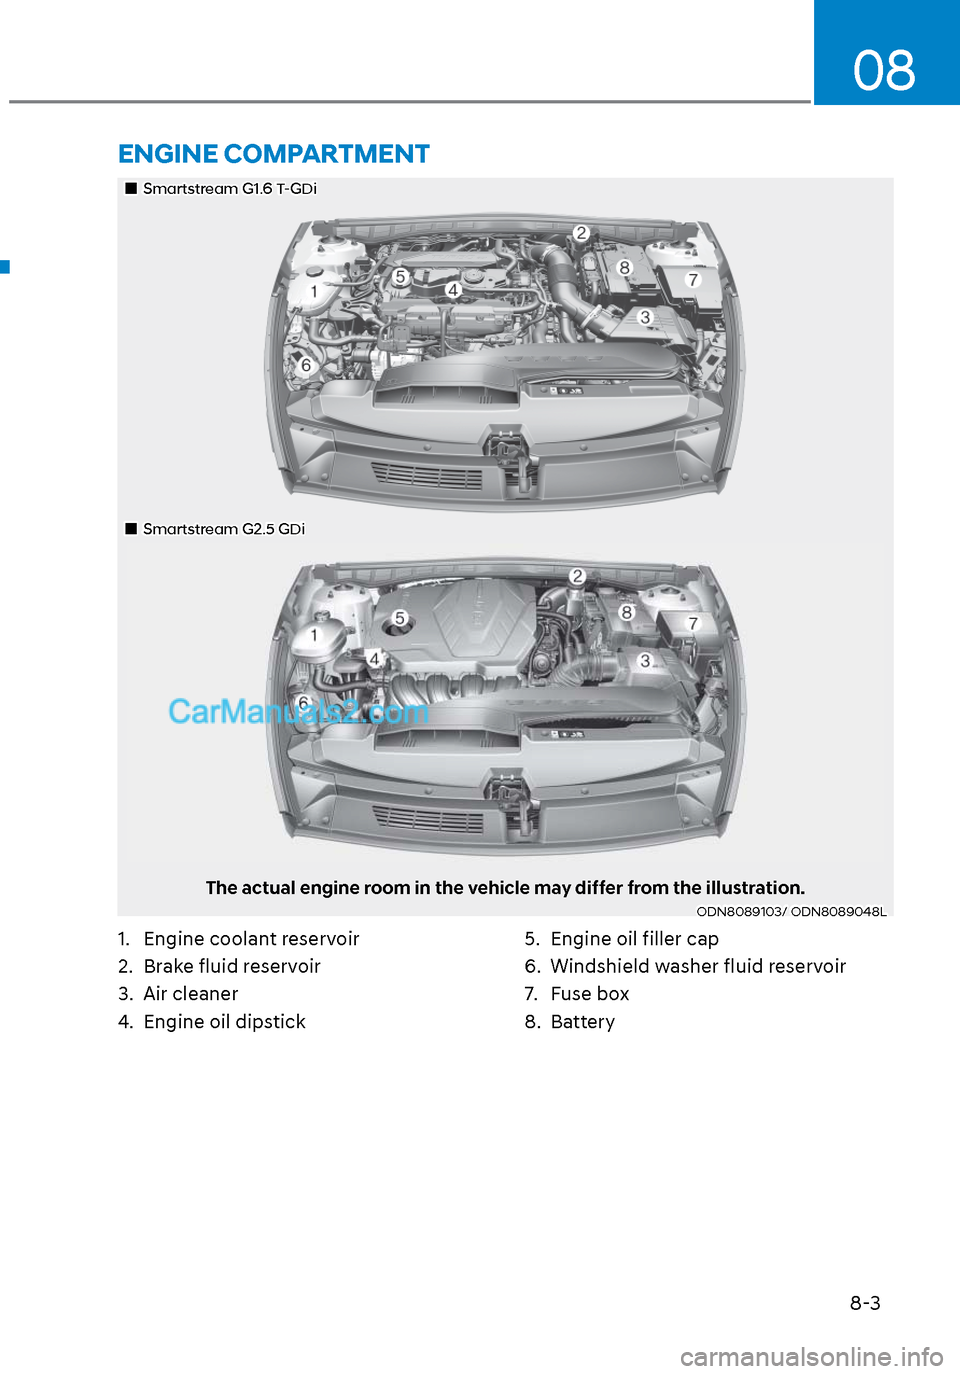 Hyundai Sonata 2020 User Guide 8-3
08
1.  Engine coolant reservoir
2.  Brake fluid reservoir 
3. Air cleaner
4.  Engine oil dipstick5.  Engine oil filler cap
6.  Windshield washer fluid reservoir
7. Fuse box
8. Battery
ENGINE COMPA